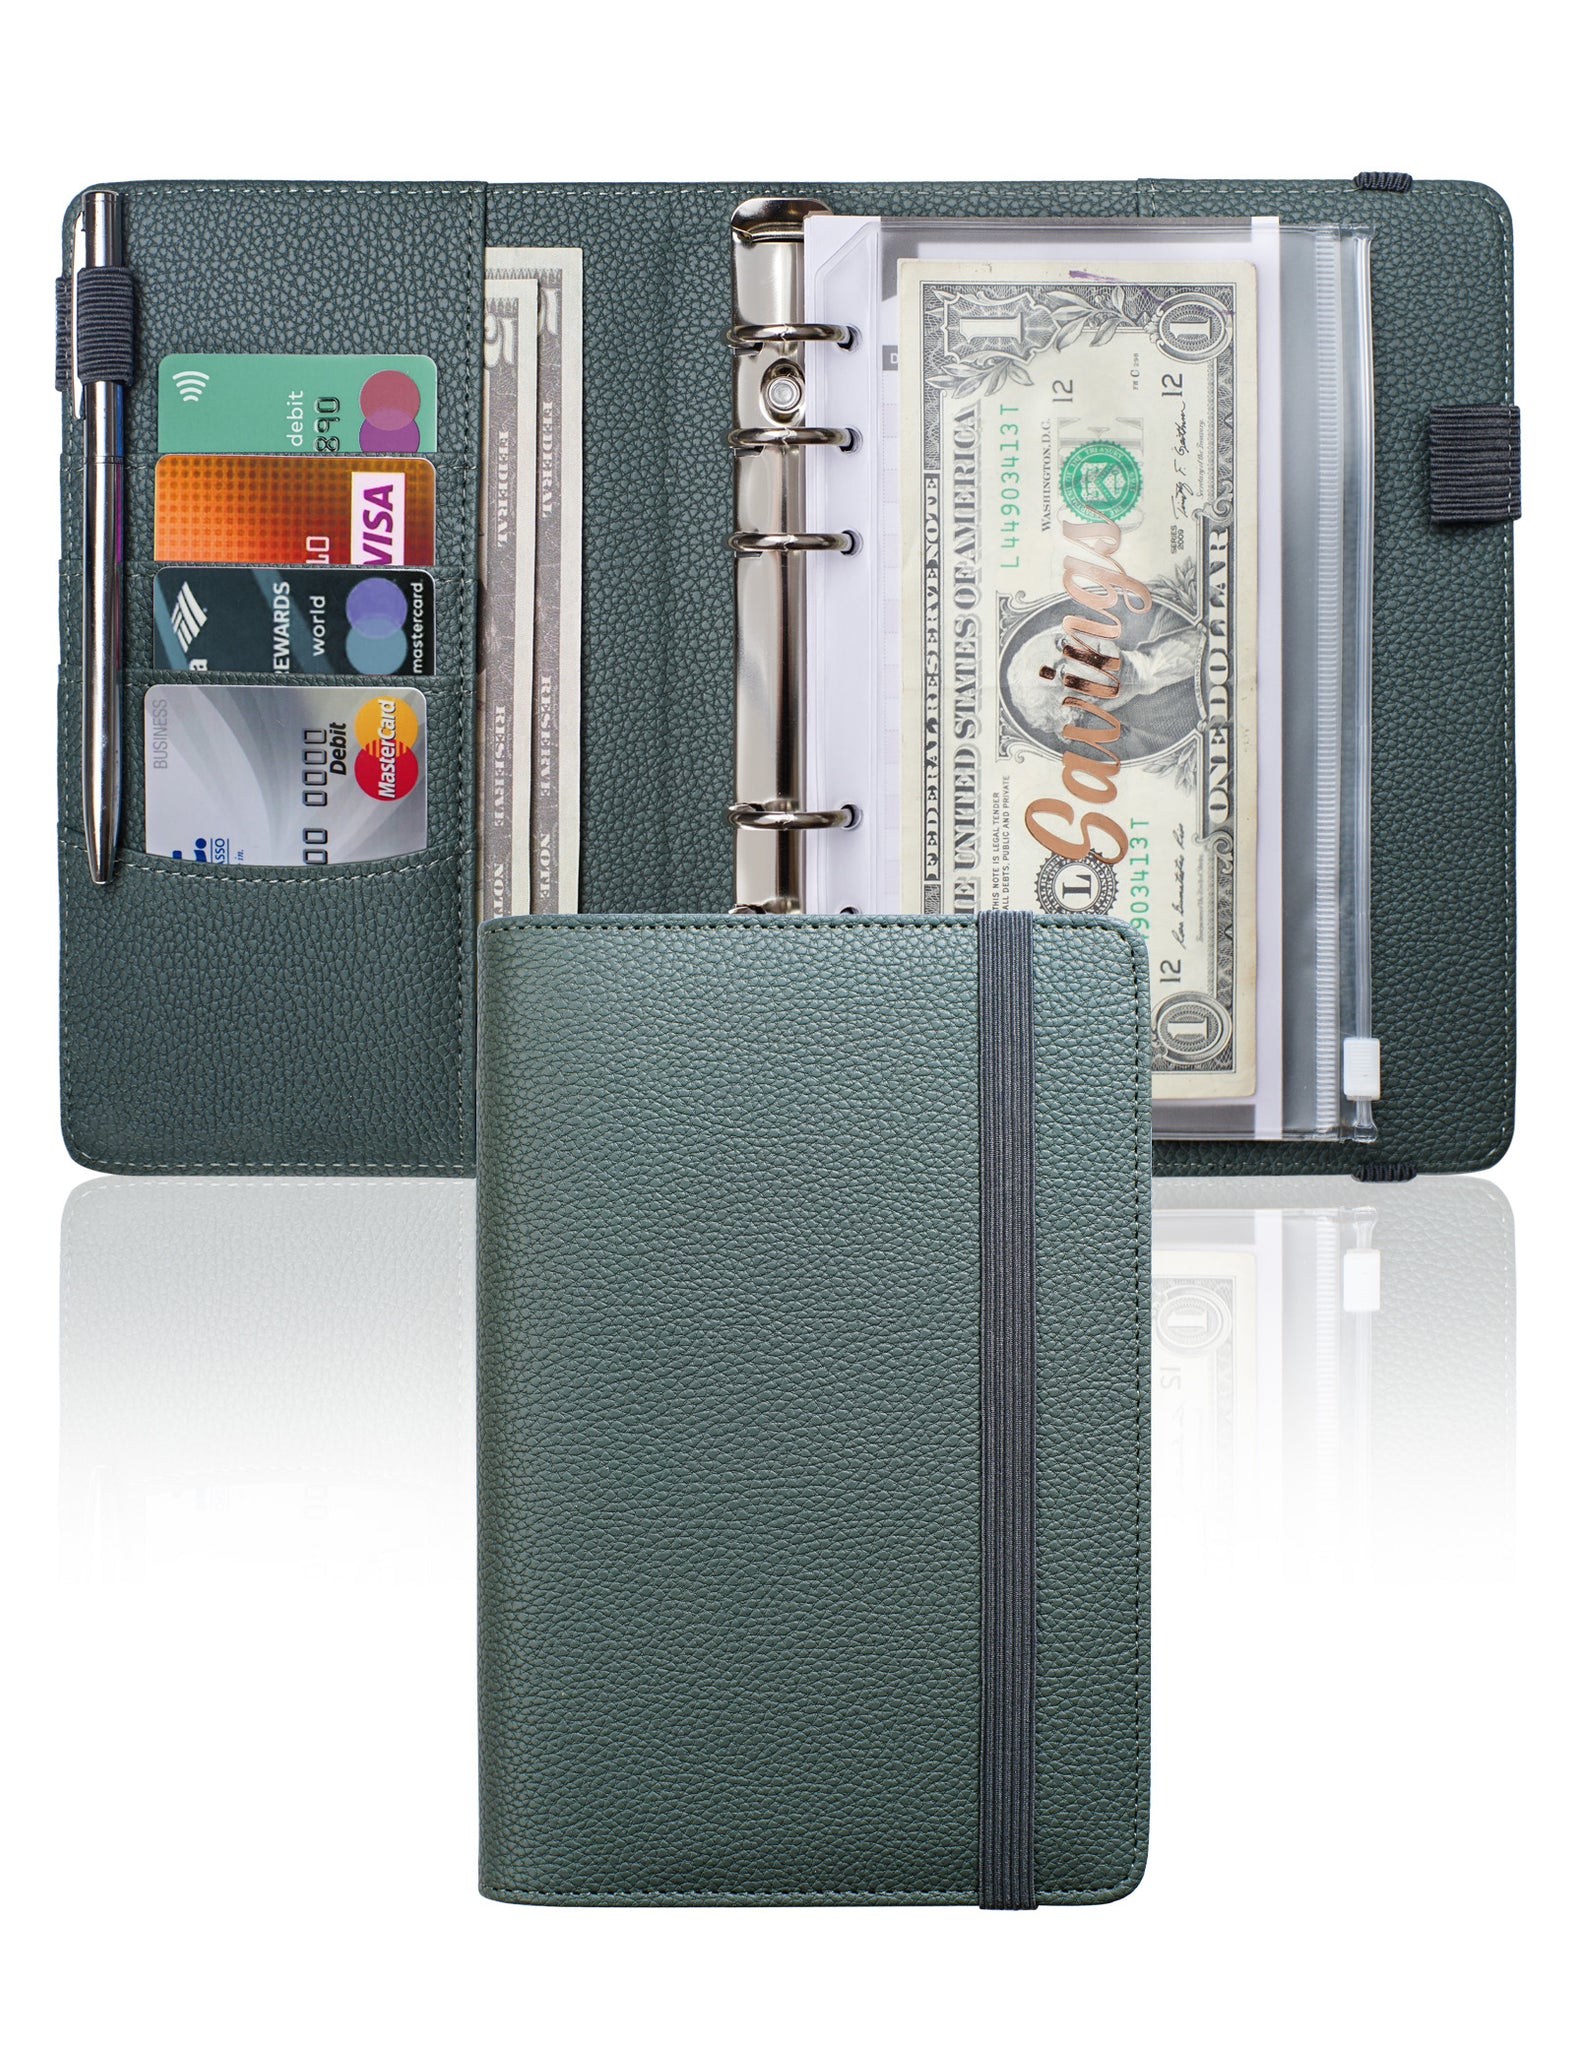 A6 Budget Binder for Money Saving Binder 10 Cash Pockets (Grey Green)